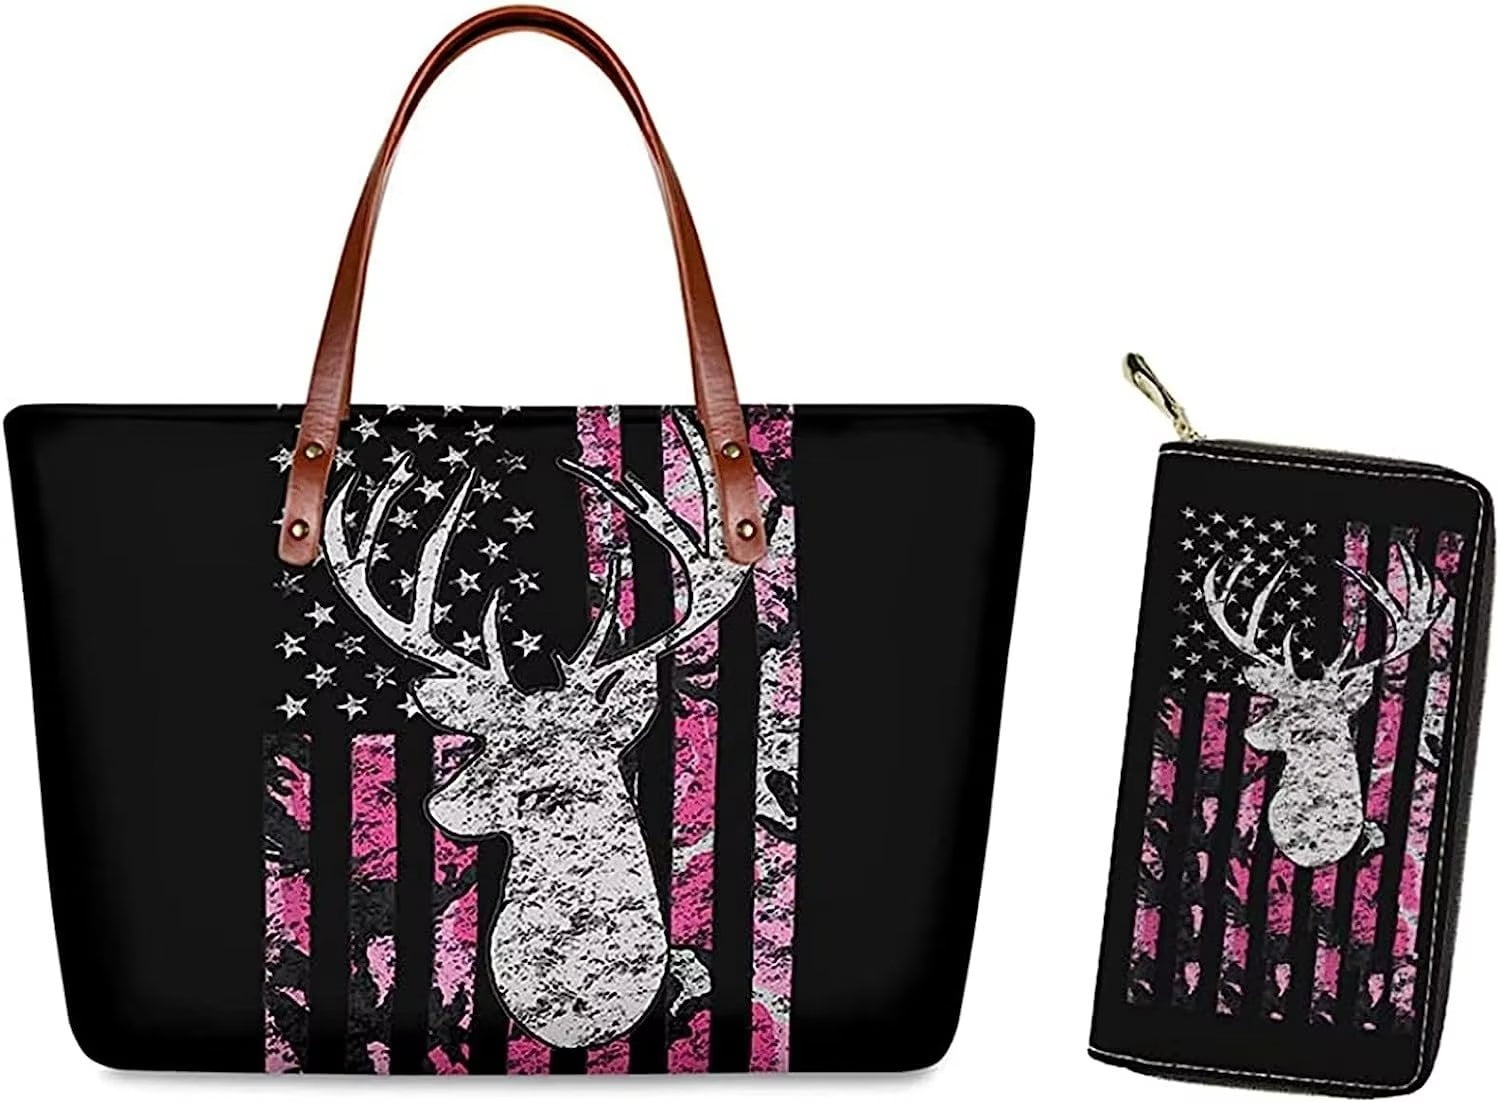 2pcs Cotton Canvas Bags Boho Floral Shoulder Bags Grocery Shopping Bag  Reusable Tote Bag 